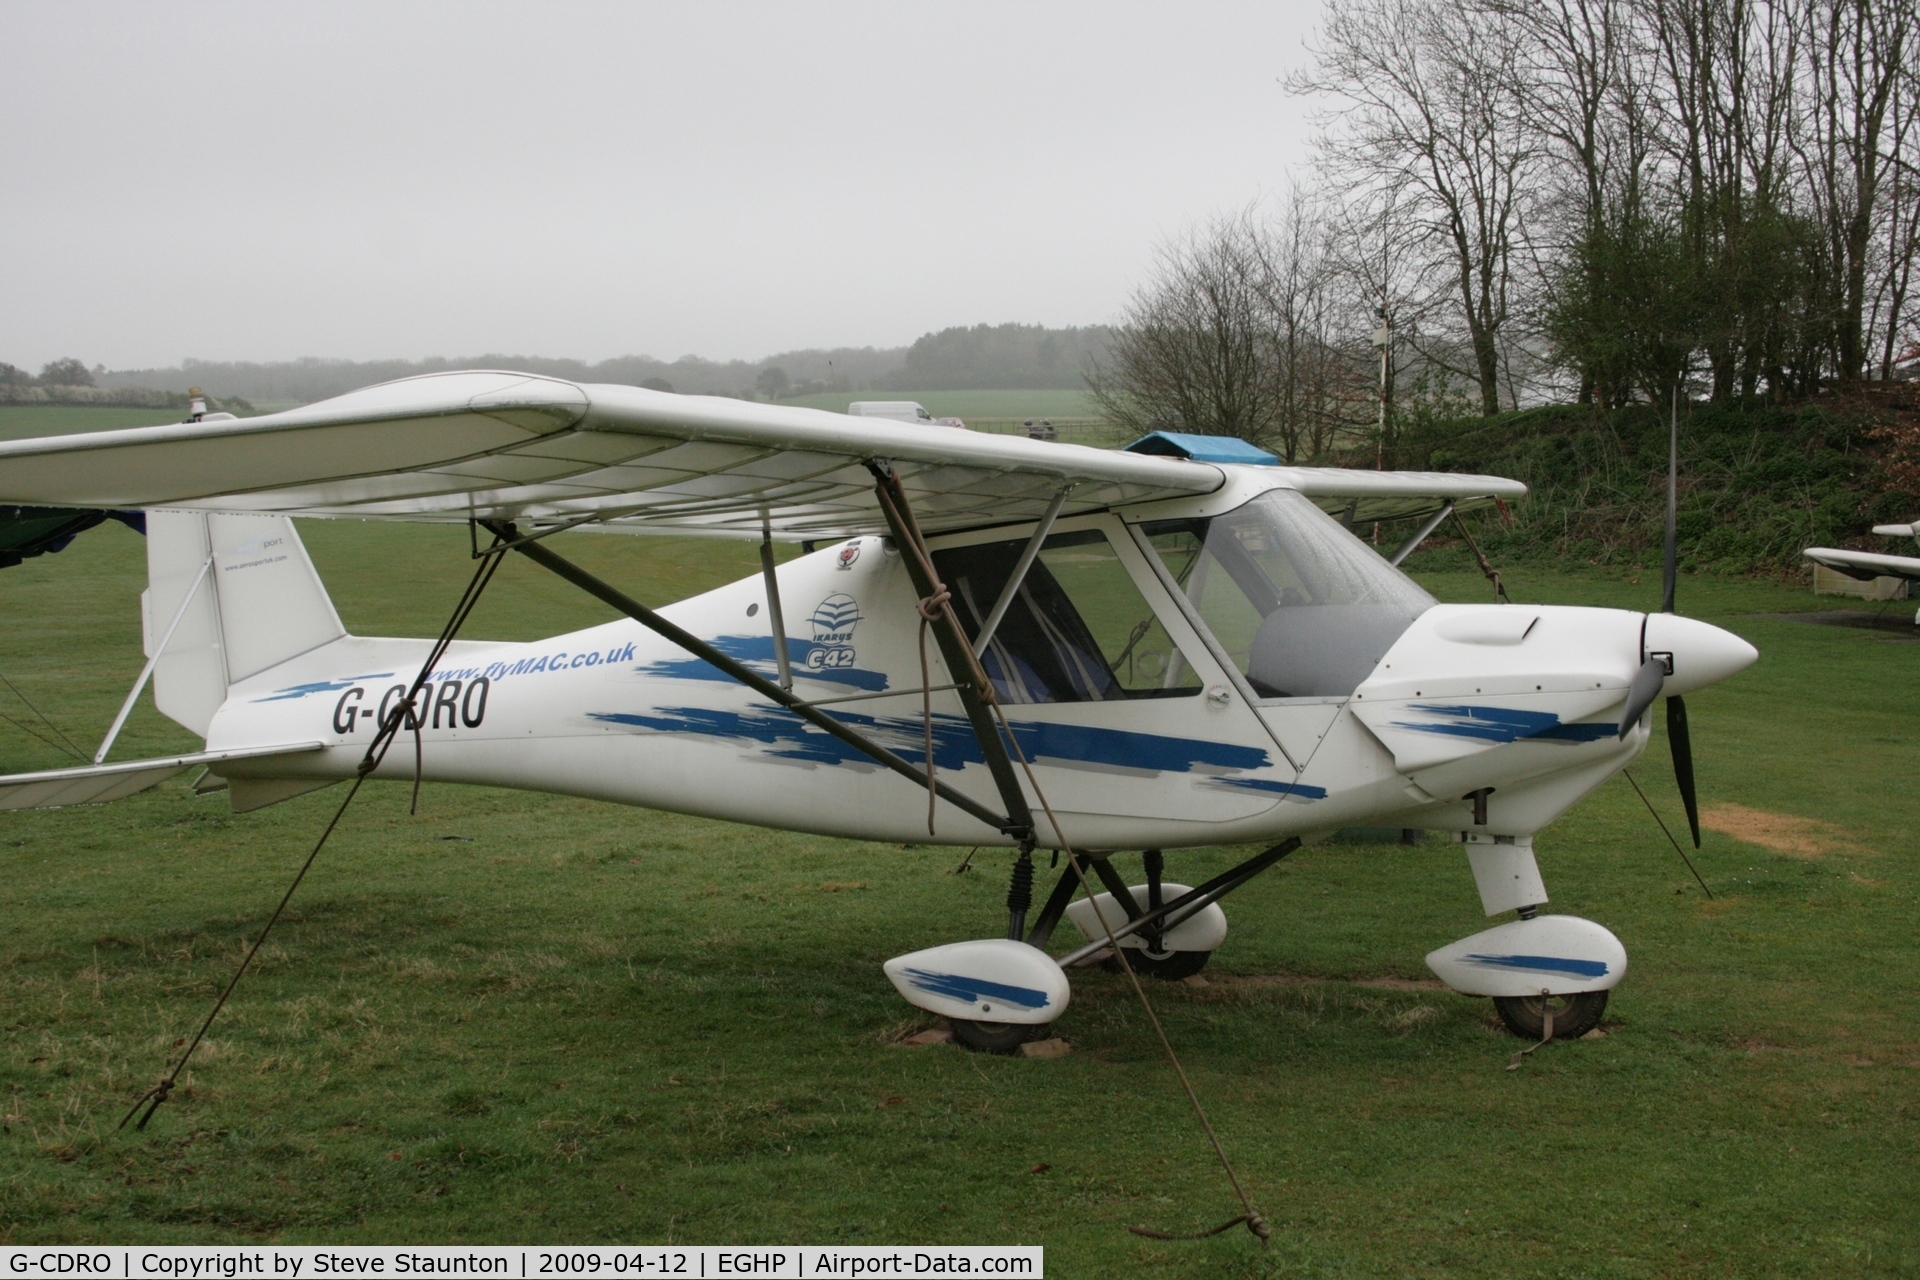 G-CDRO, 2005 Comco Ikarus C42 FB80 C/N 0507-6750, Taken at Popham Airfield, England on a gloomy April Sunday (12/04/09)